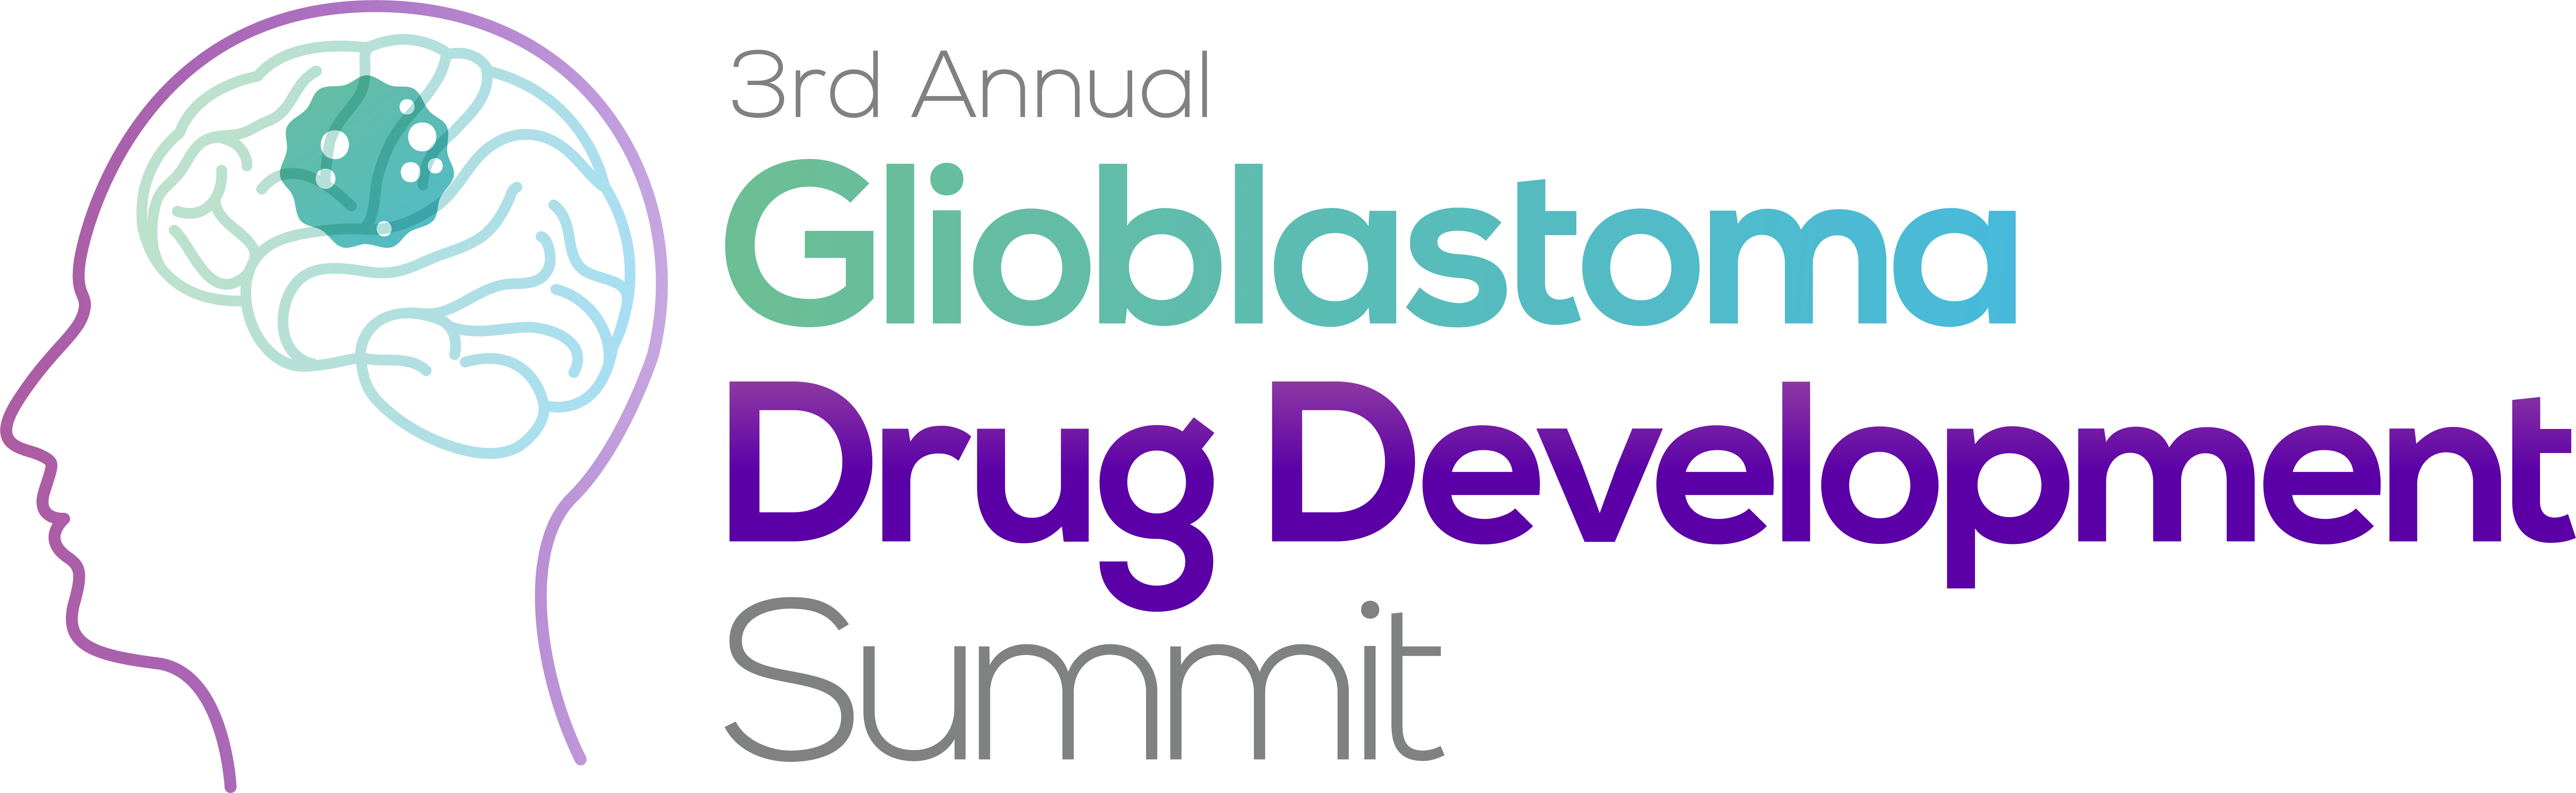 22295 3rd Glioblastoma Drug Development Summit logo